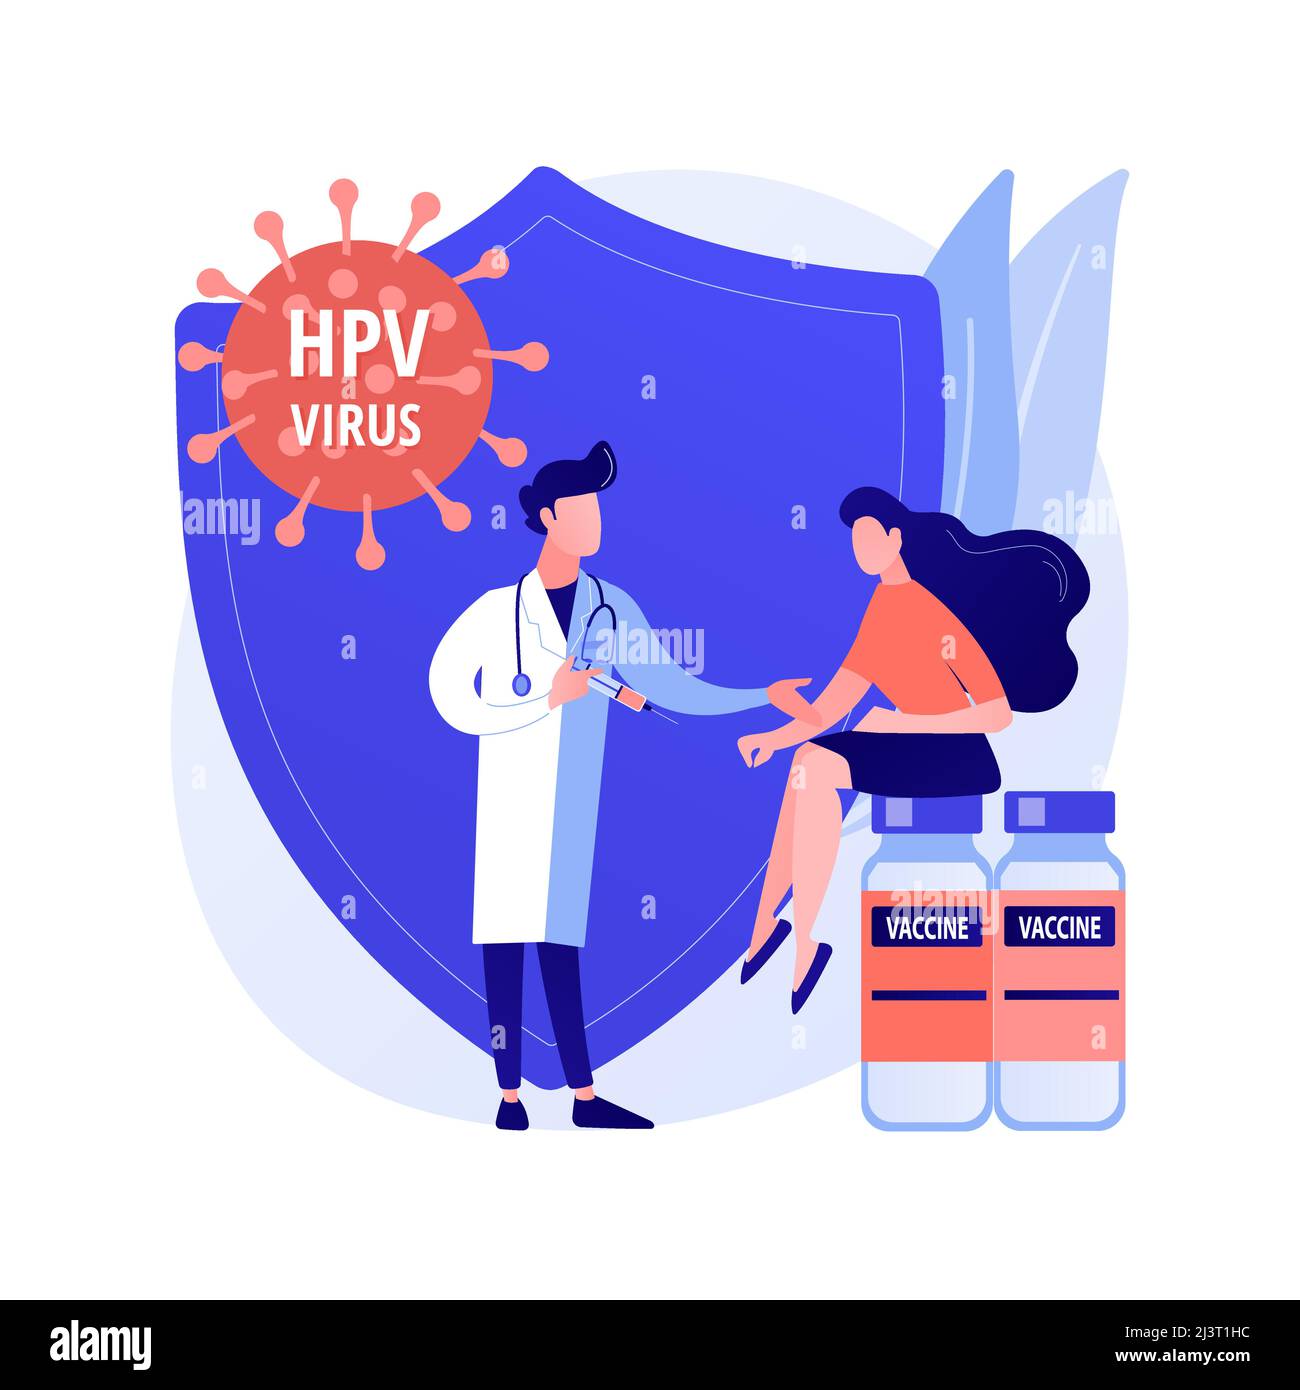 HPV-Impfung abstrakte Konzept Vektor-Illustration. Schutz vor Gebärmutterhalskrebs, Impfprogramm gegen humane Papillomaviren, HPV-Impfung, Stock Vektor